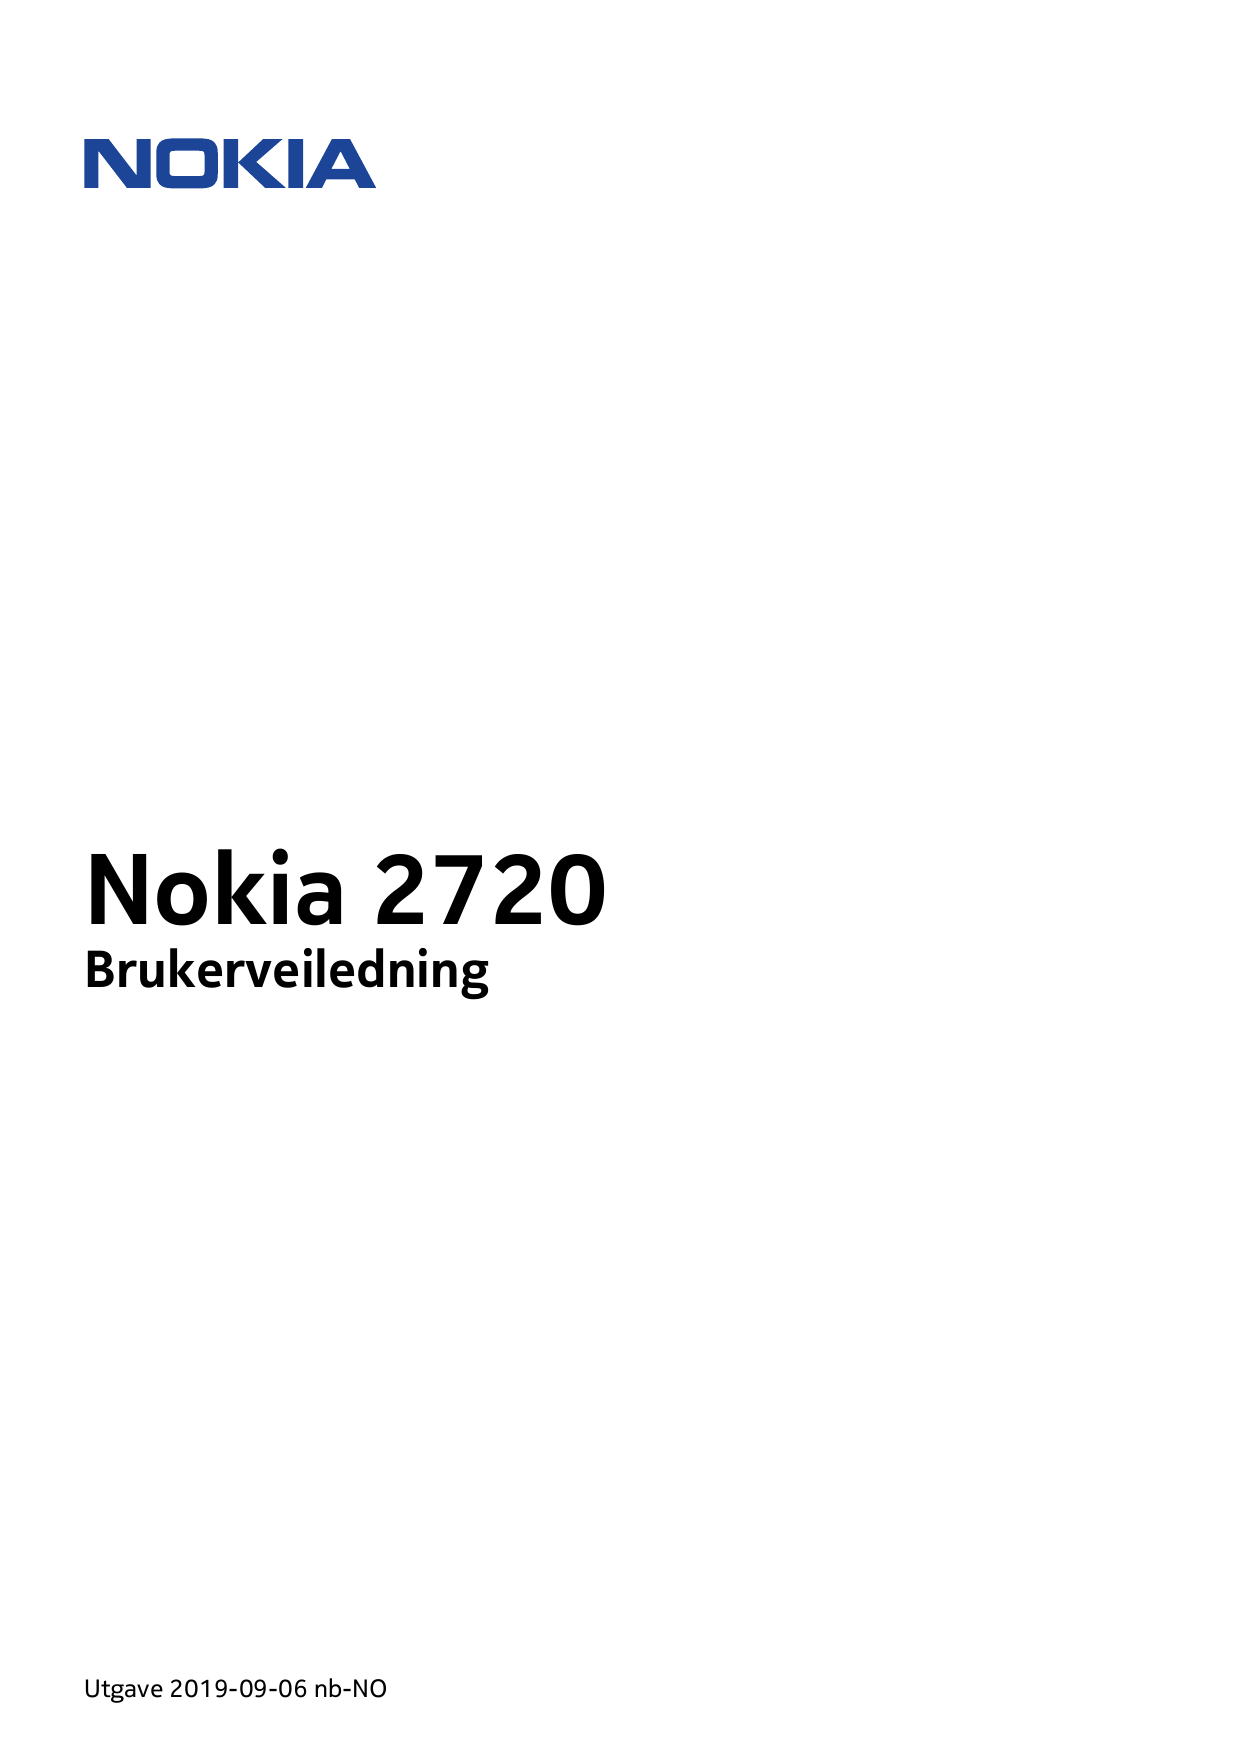 Nokia 2720BrukerveiledningUtgave 2019-09-06 nb-NO